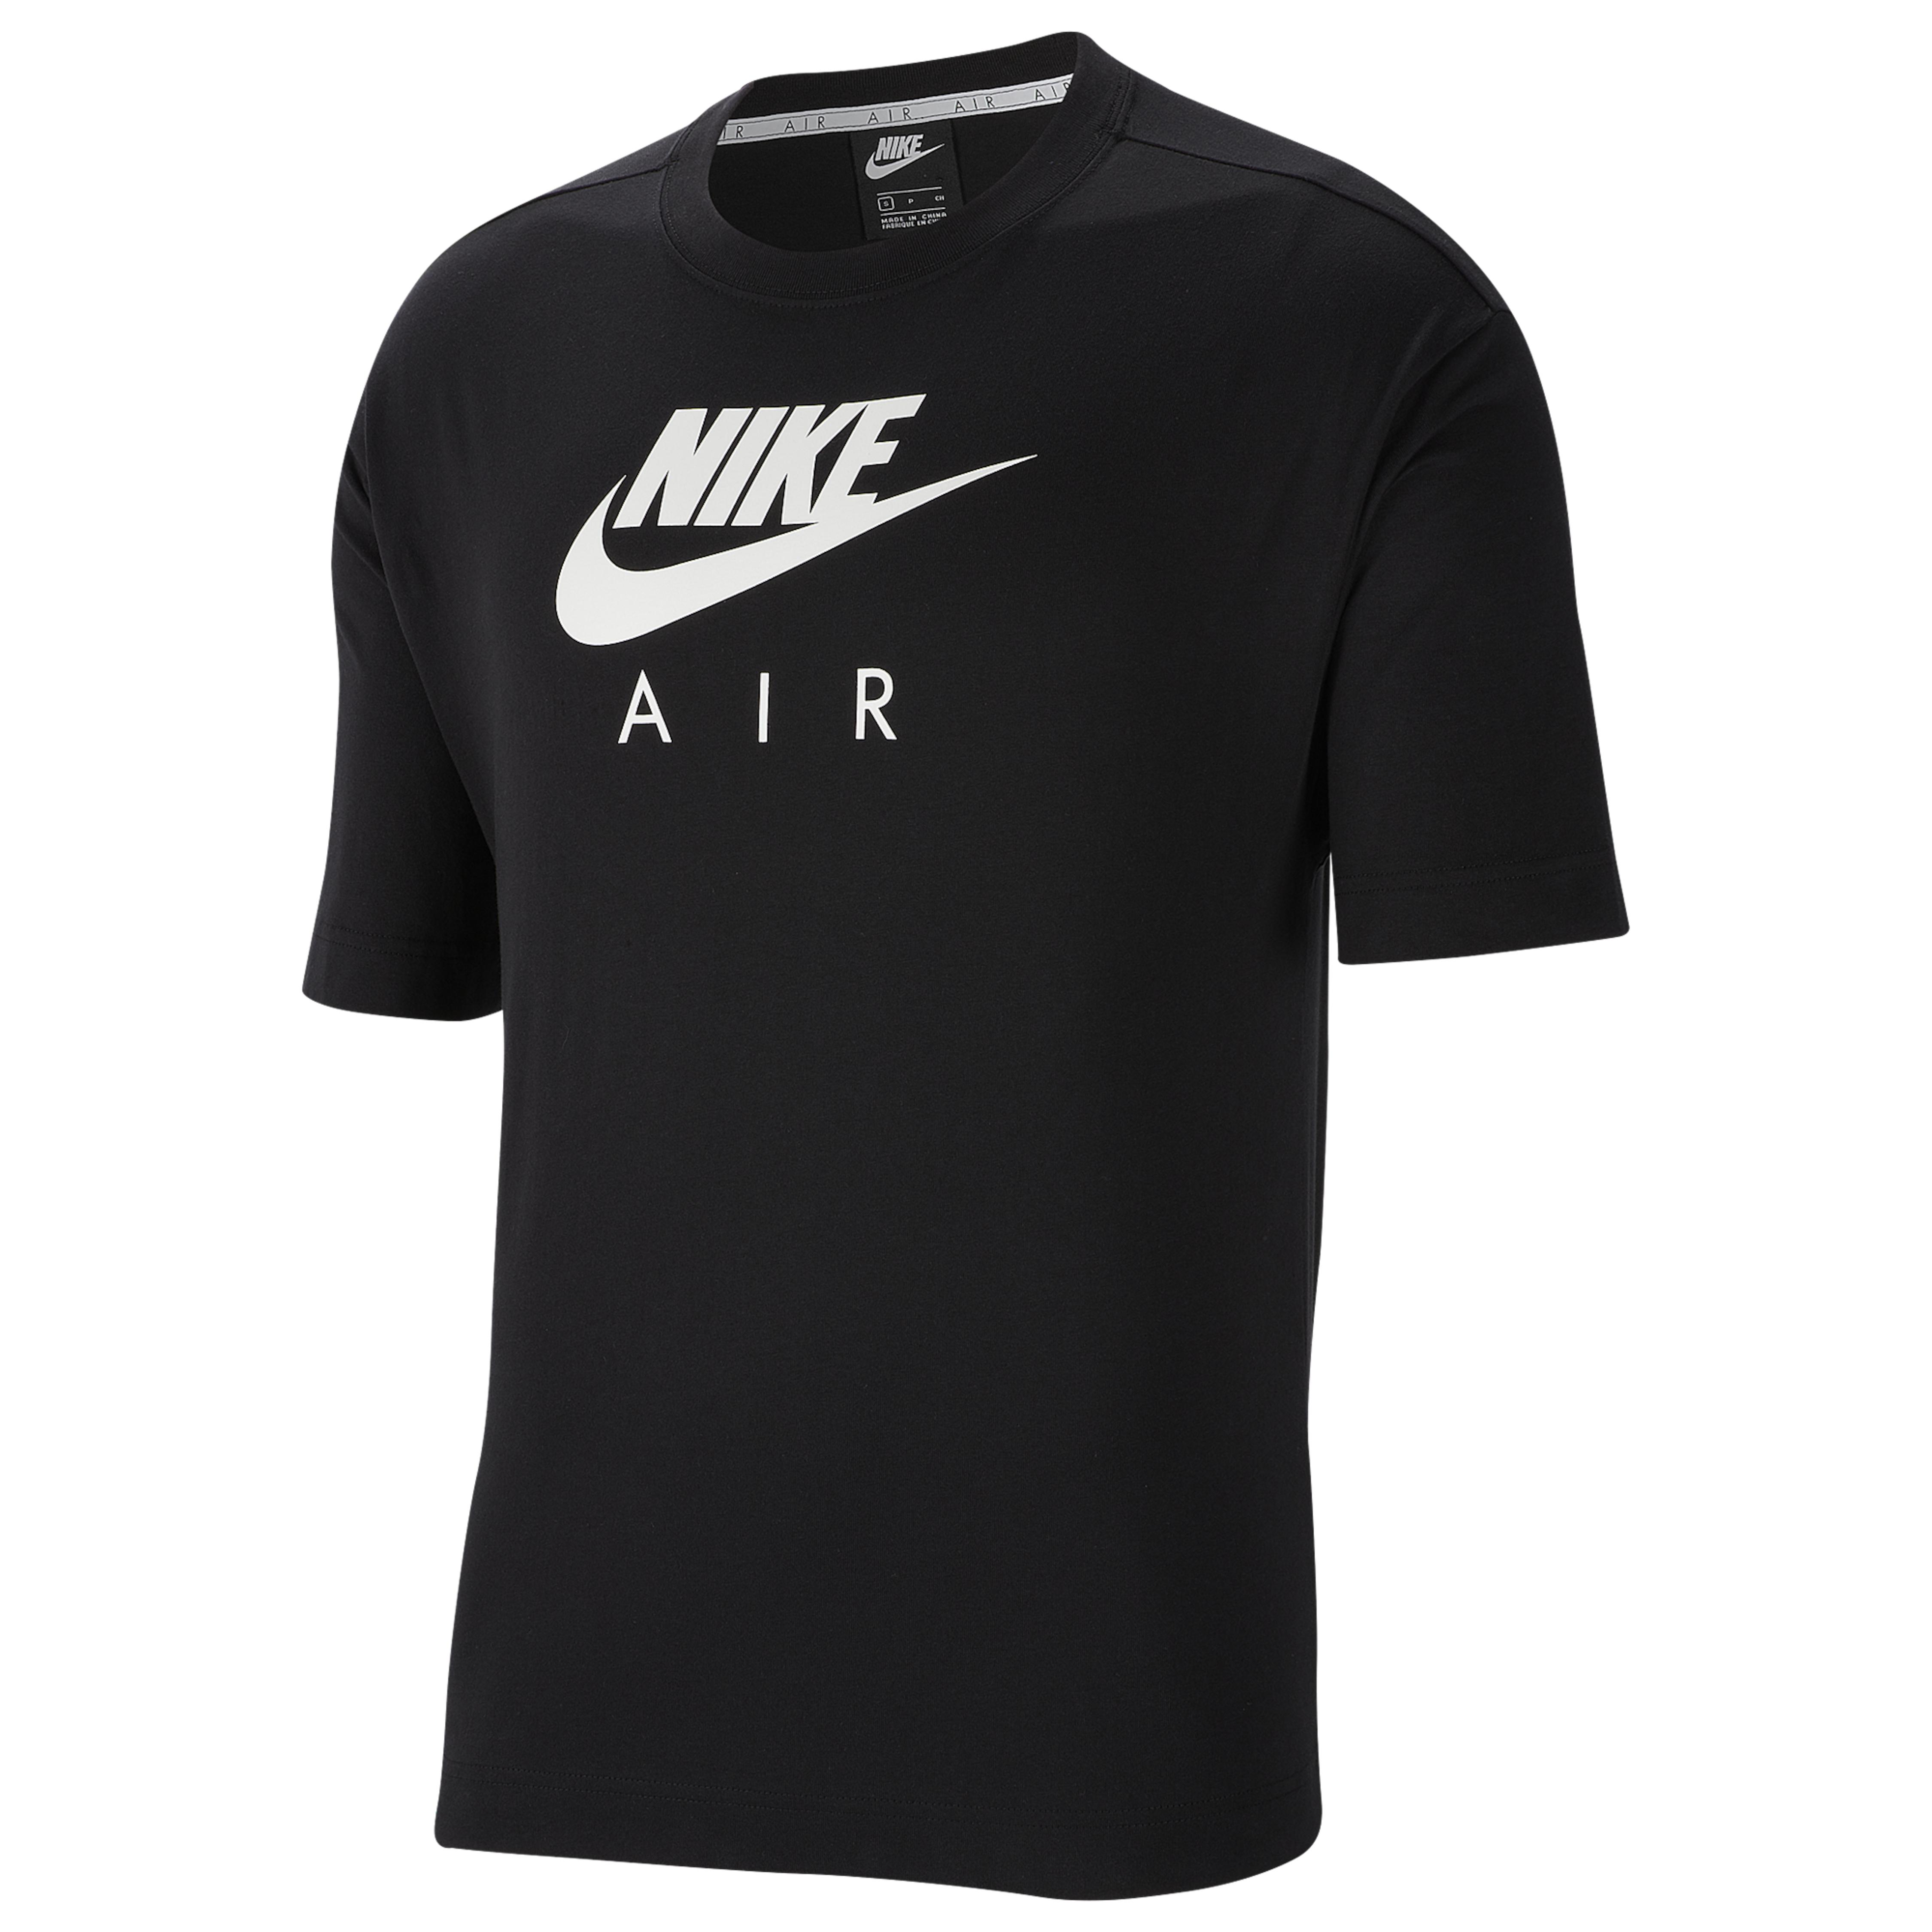 Nike Cotton Boyfriend Air Short Sleeve T-shirt in Black - Lyst